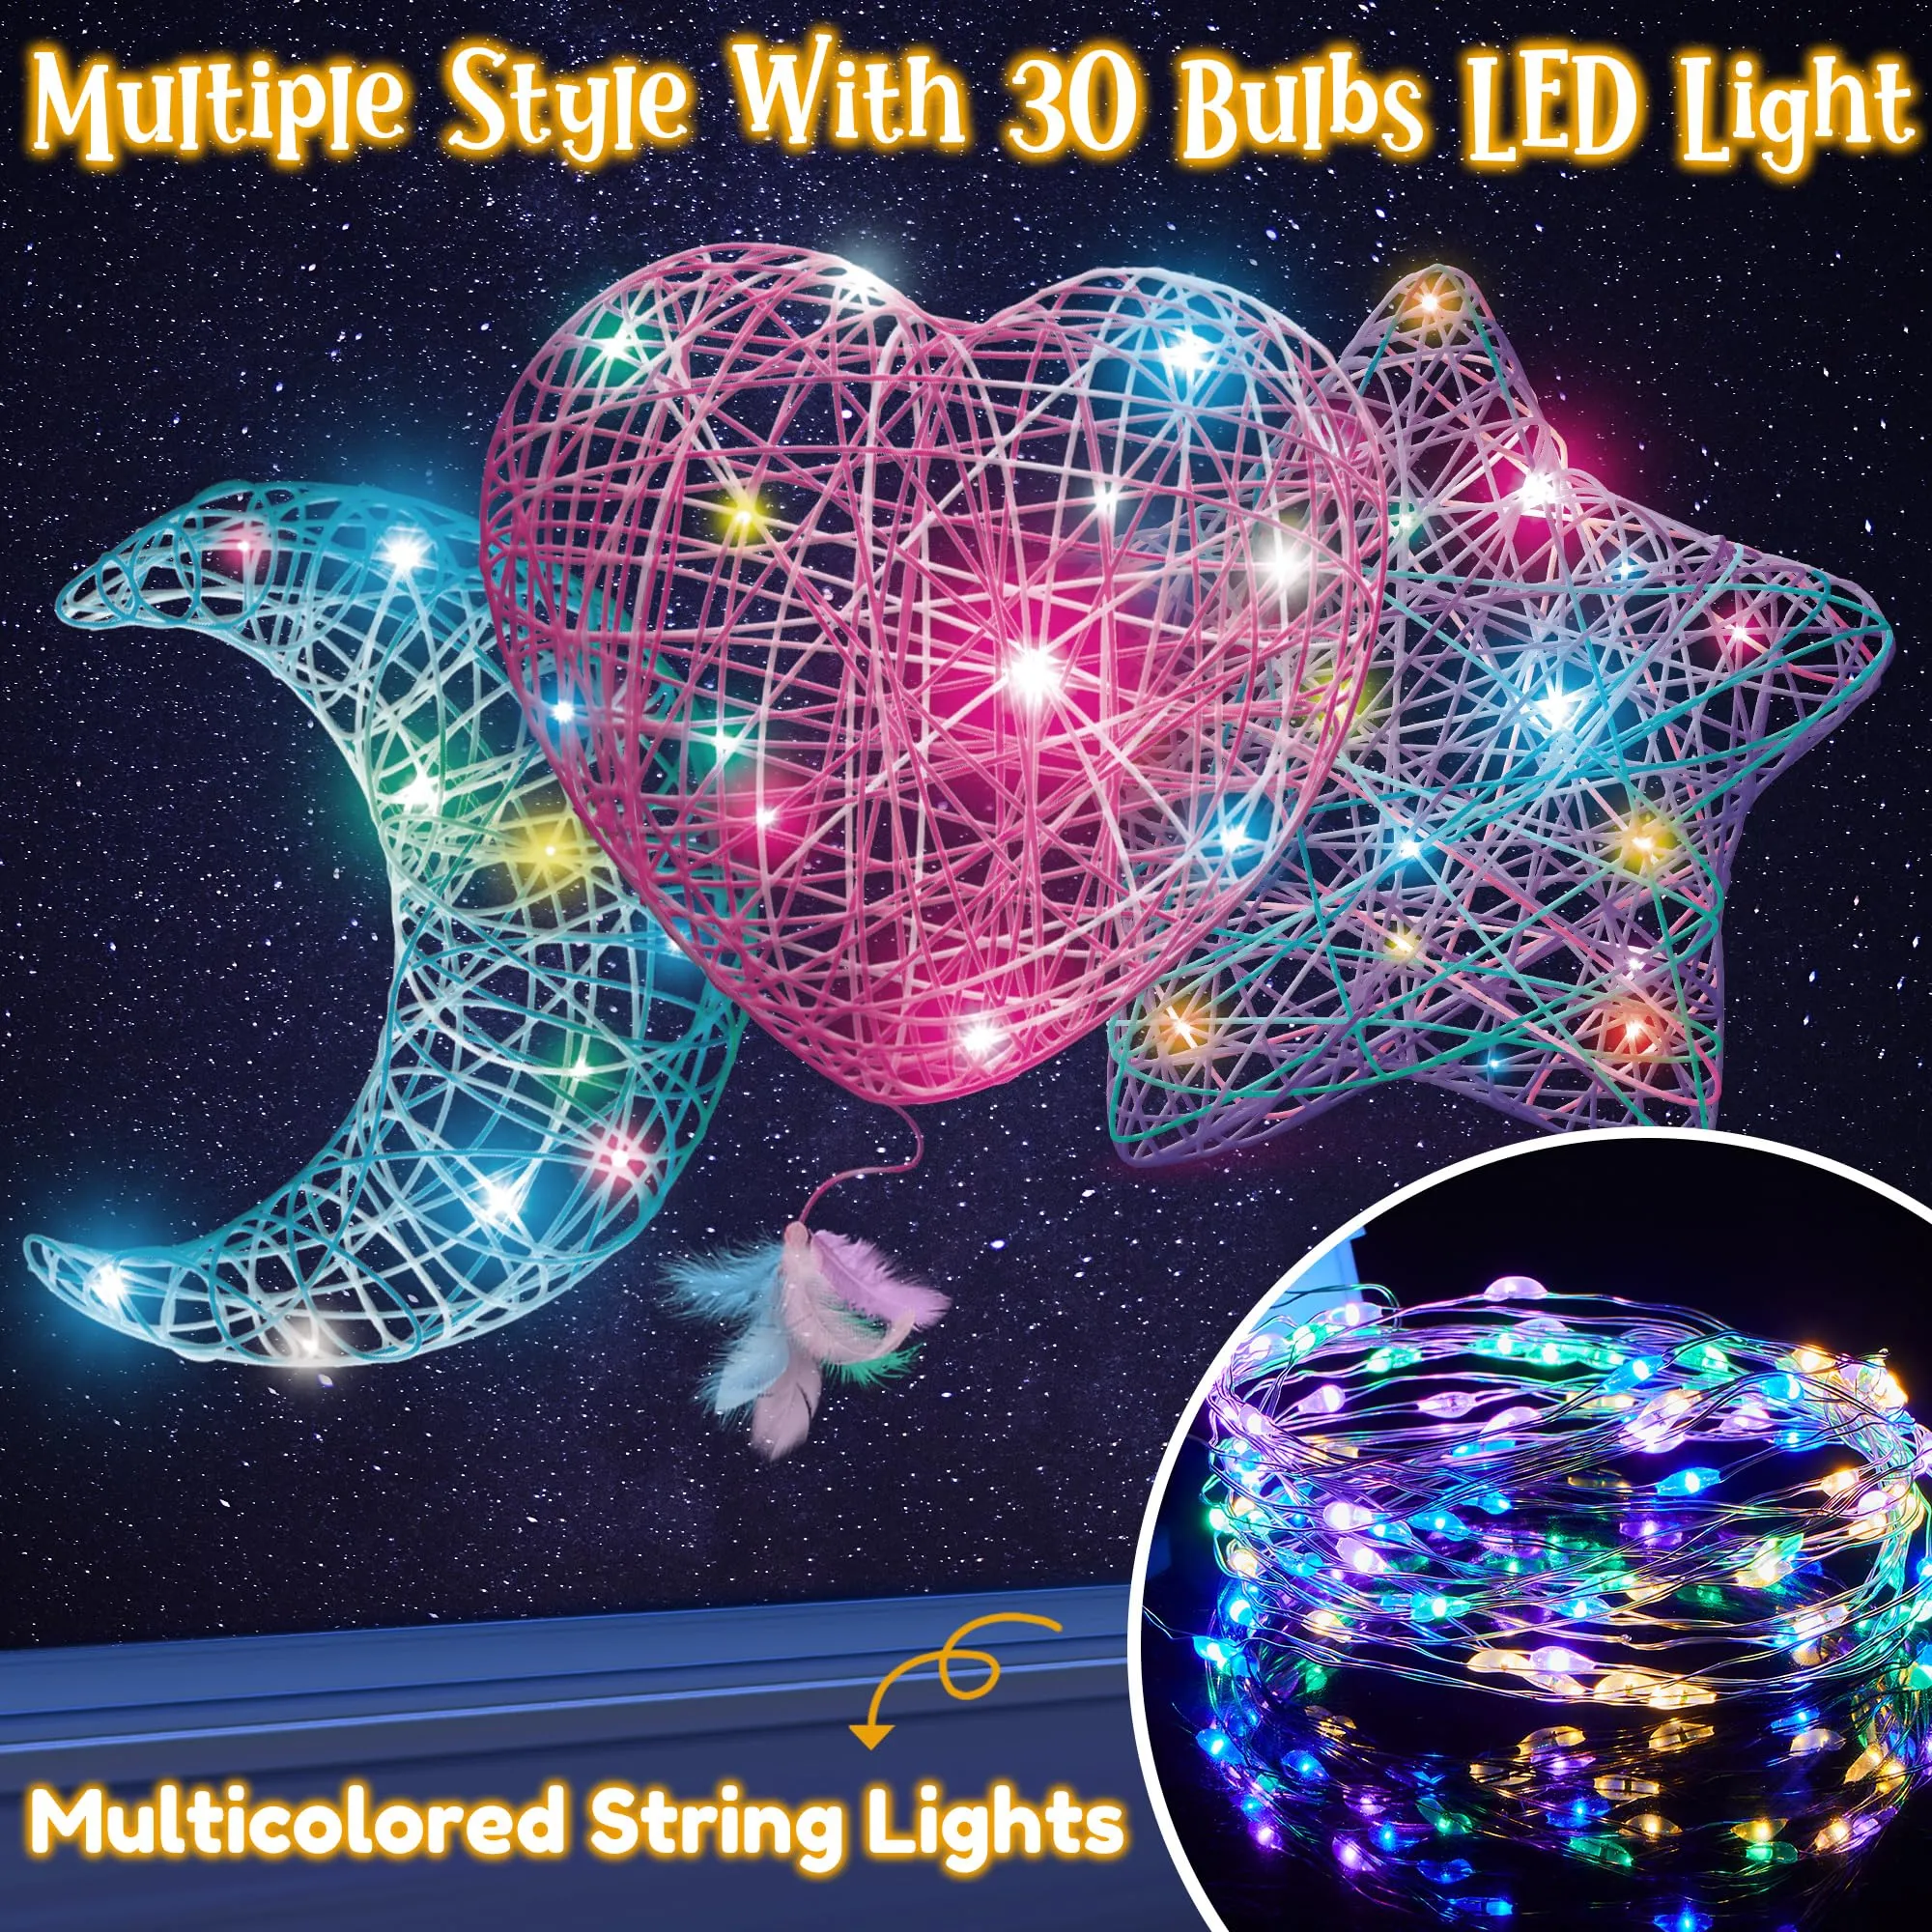 3D String Art With LED Lights Multi-Colored LED Light String Art